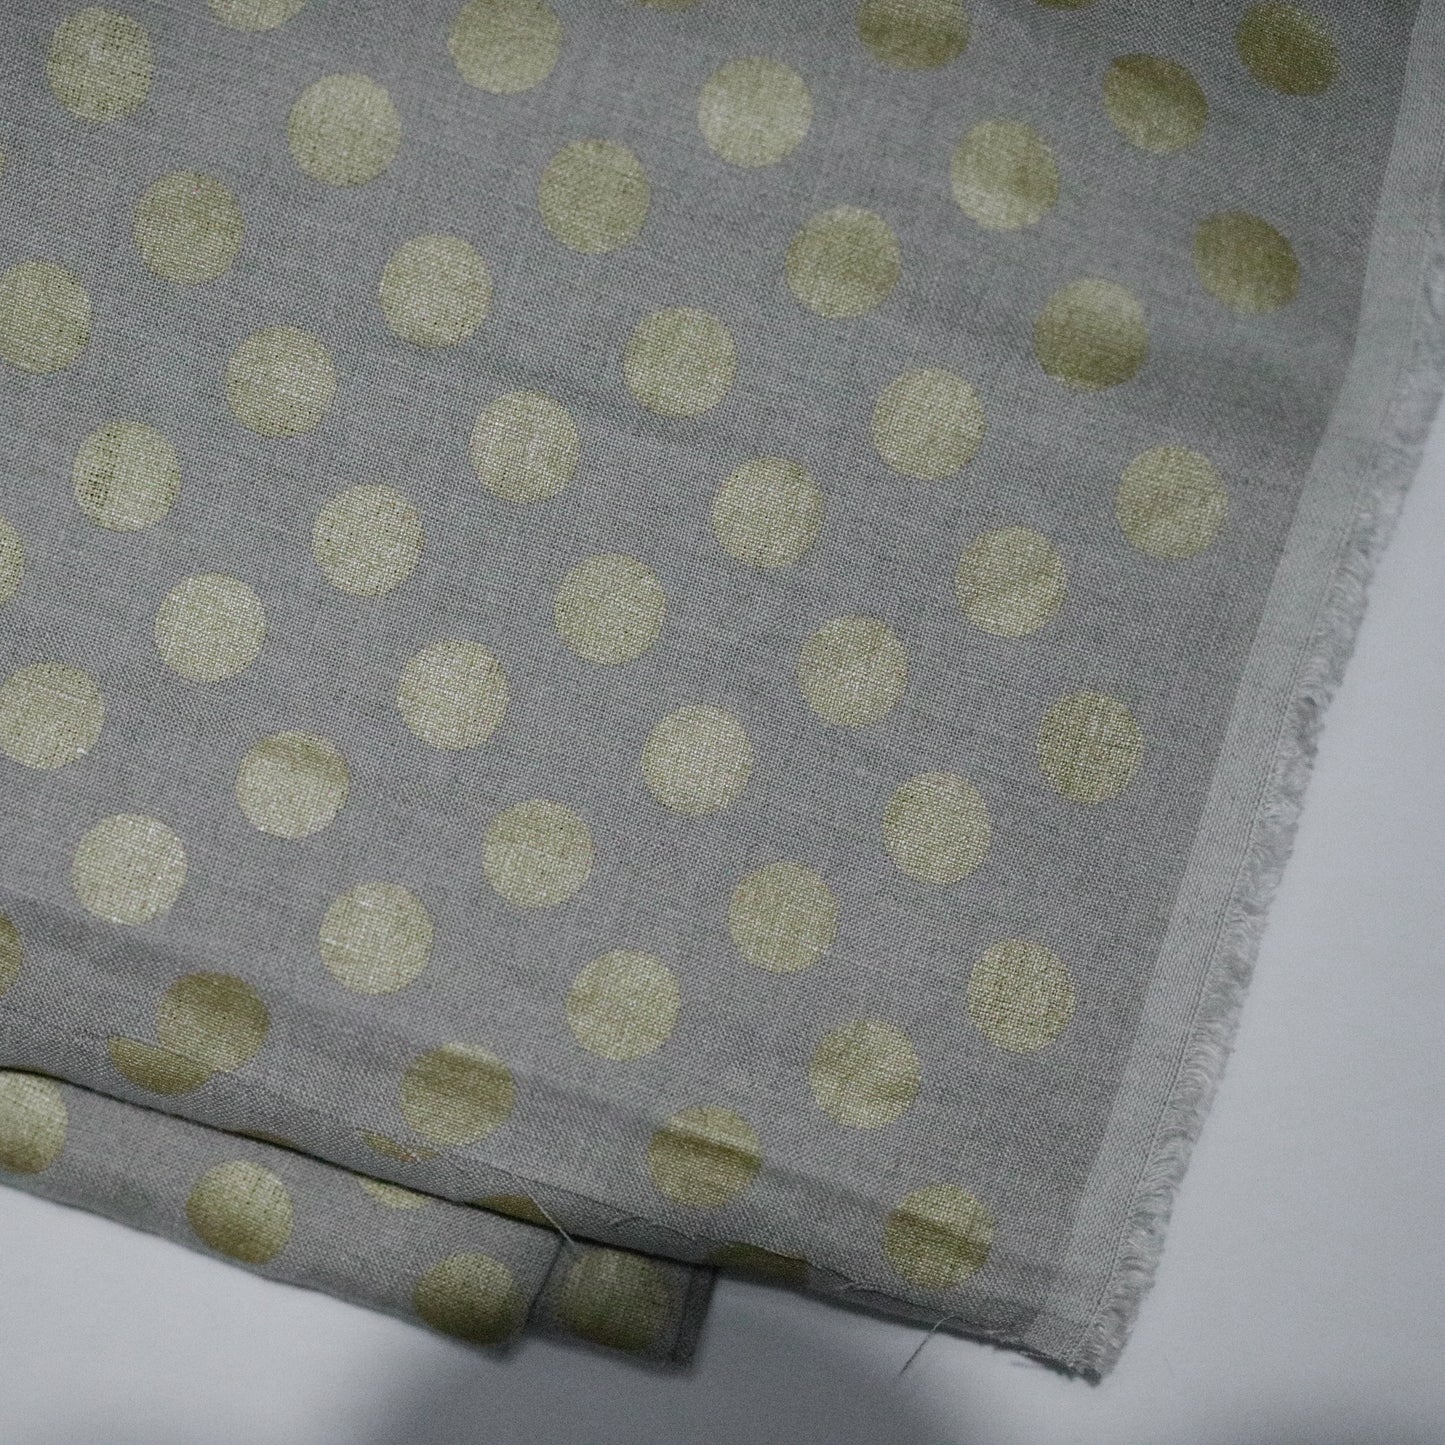 Golden polka dots on natural linen colour 100% linen fabric